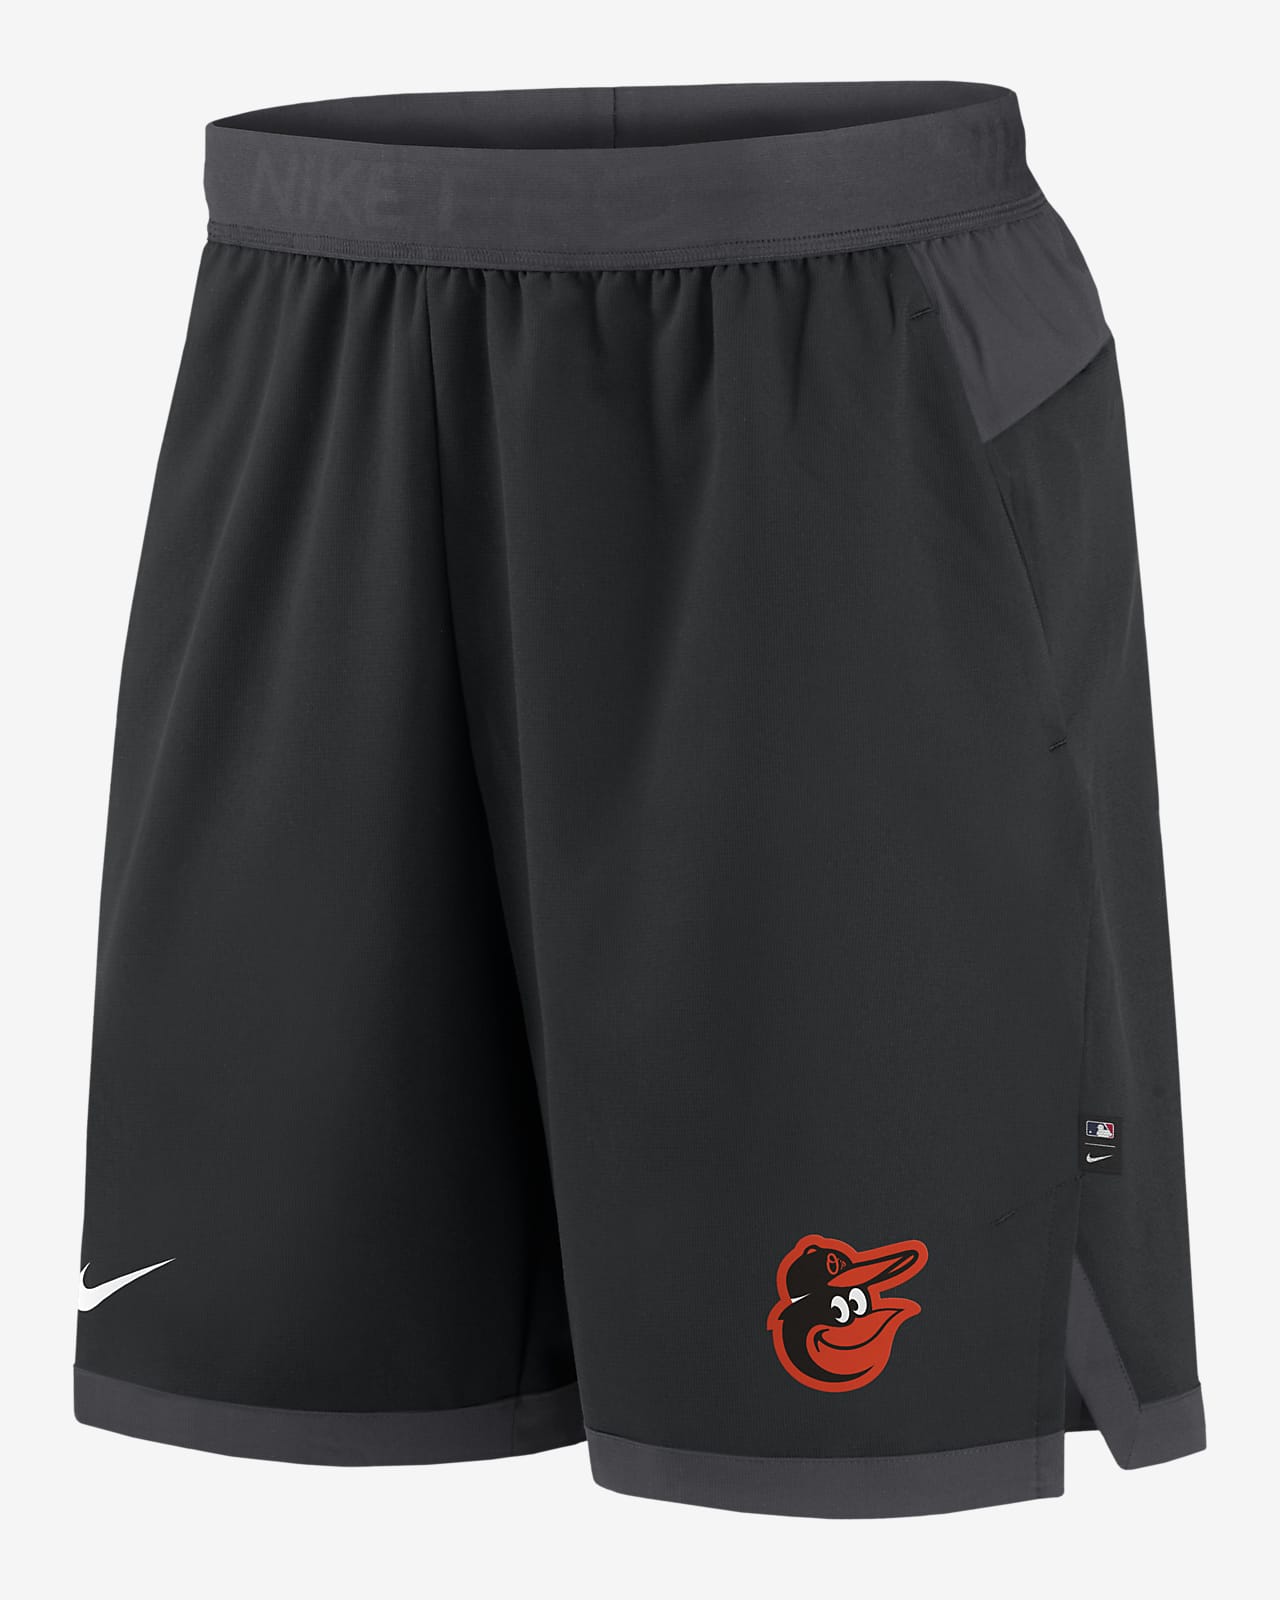 Nike Dri-FIT Flex (MLB Baltimore Orioles) Men's Shorts